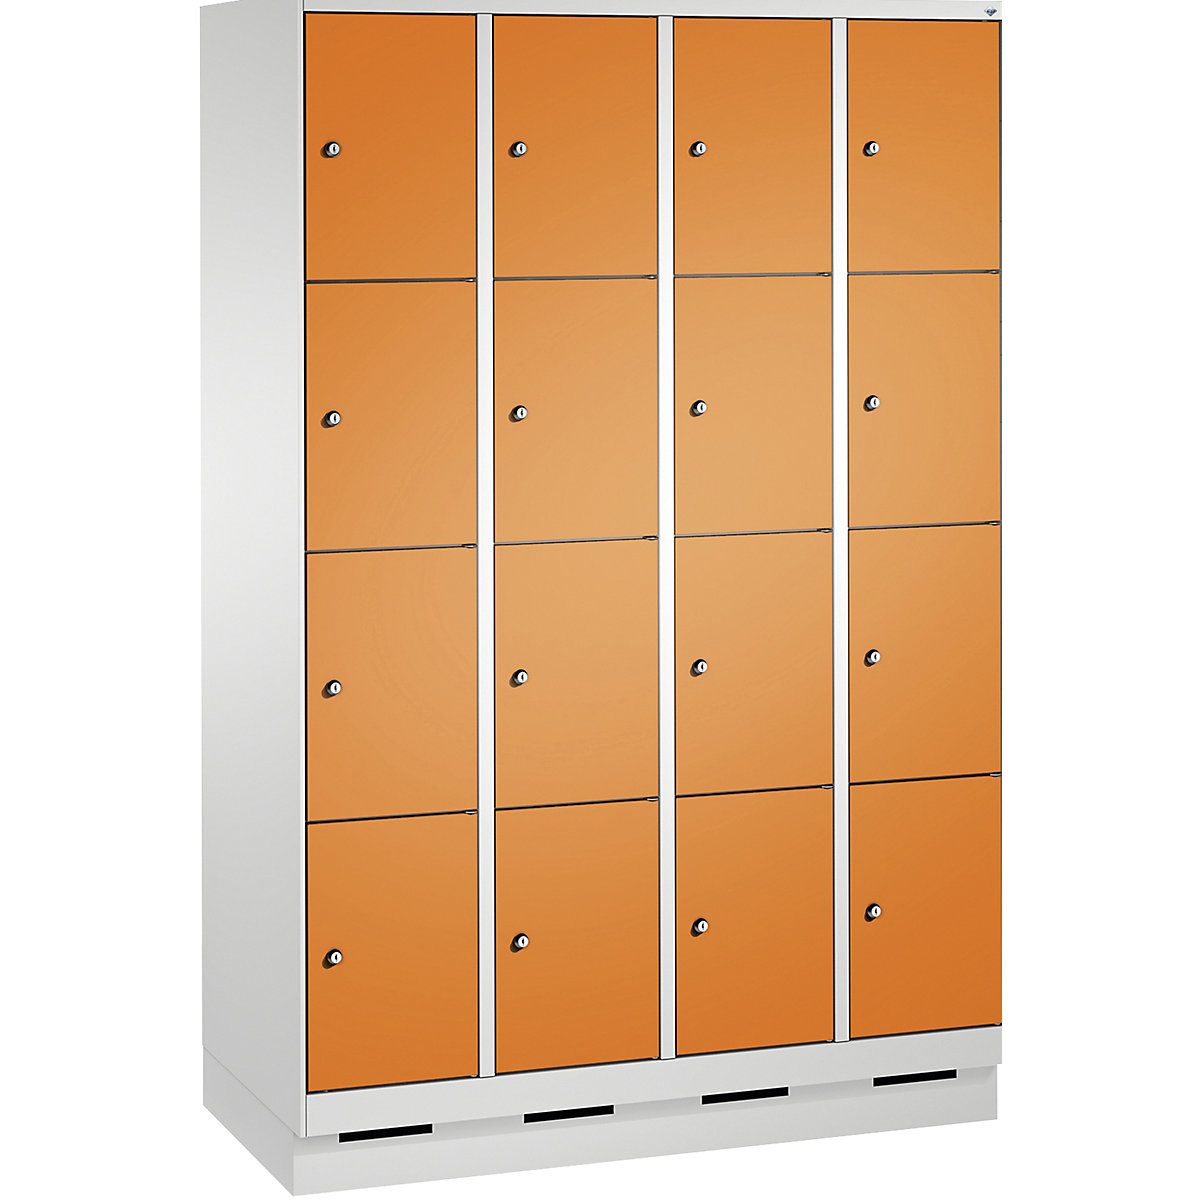 EVOLO locker unit, with plinth – C+P, 4 compartments, 4 shelf compartments each, compartment width 300 mm, light grey / yellow orange